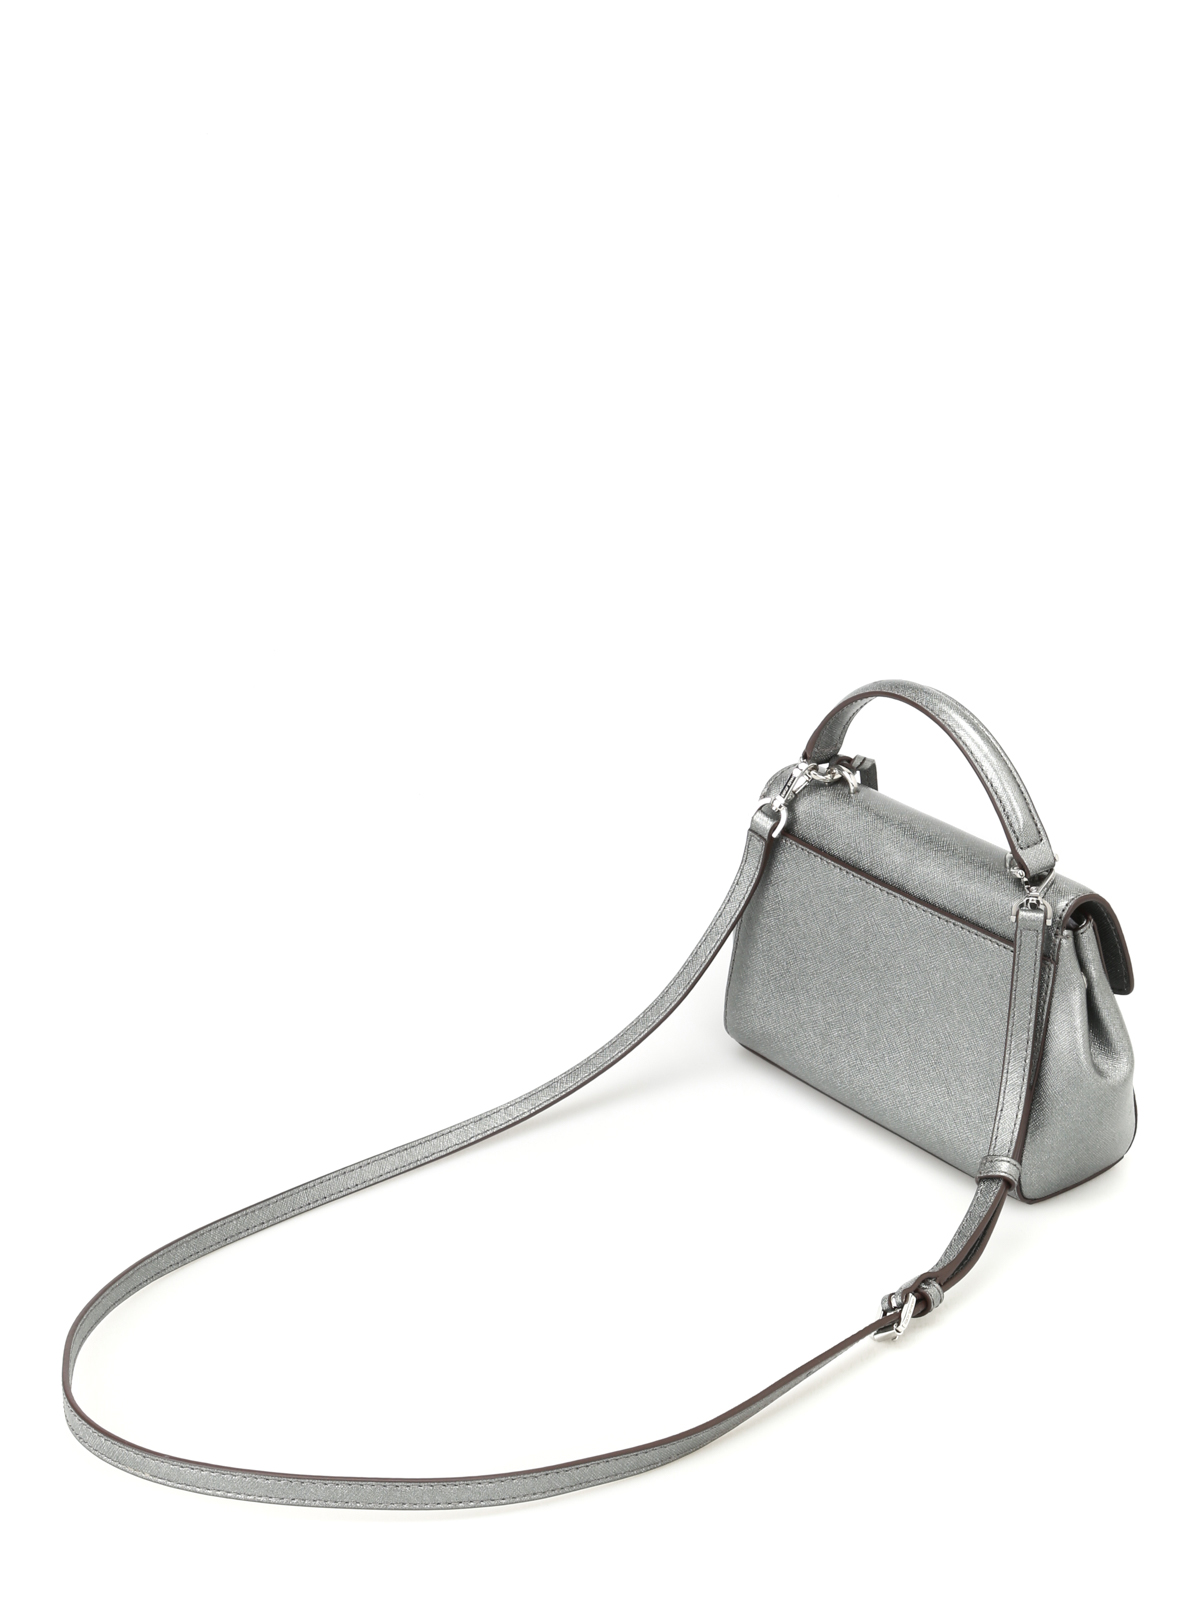 Ava Small Metallic Leather Satchel Bag, Silver